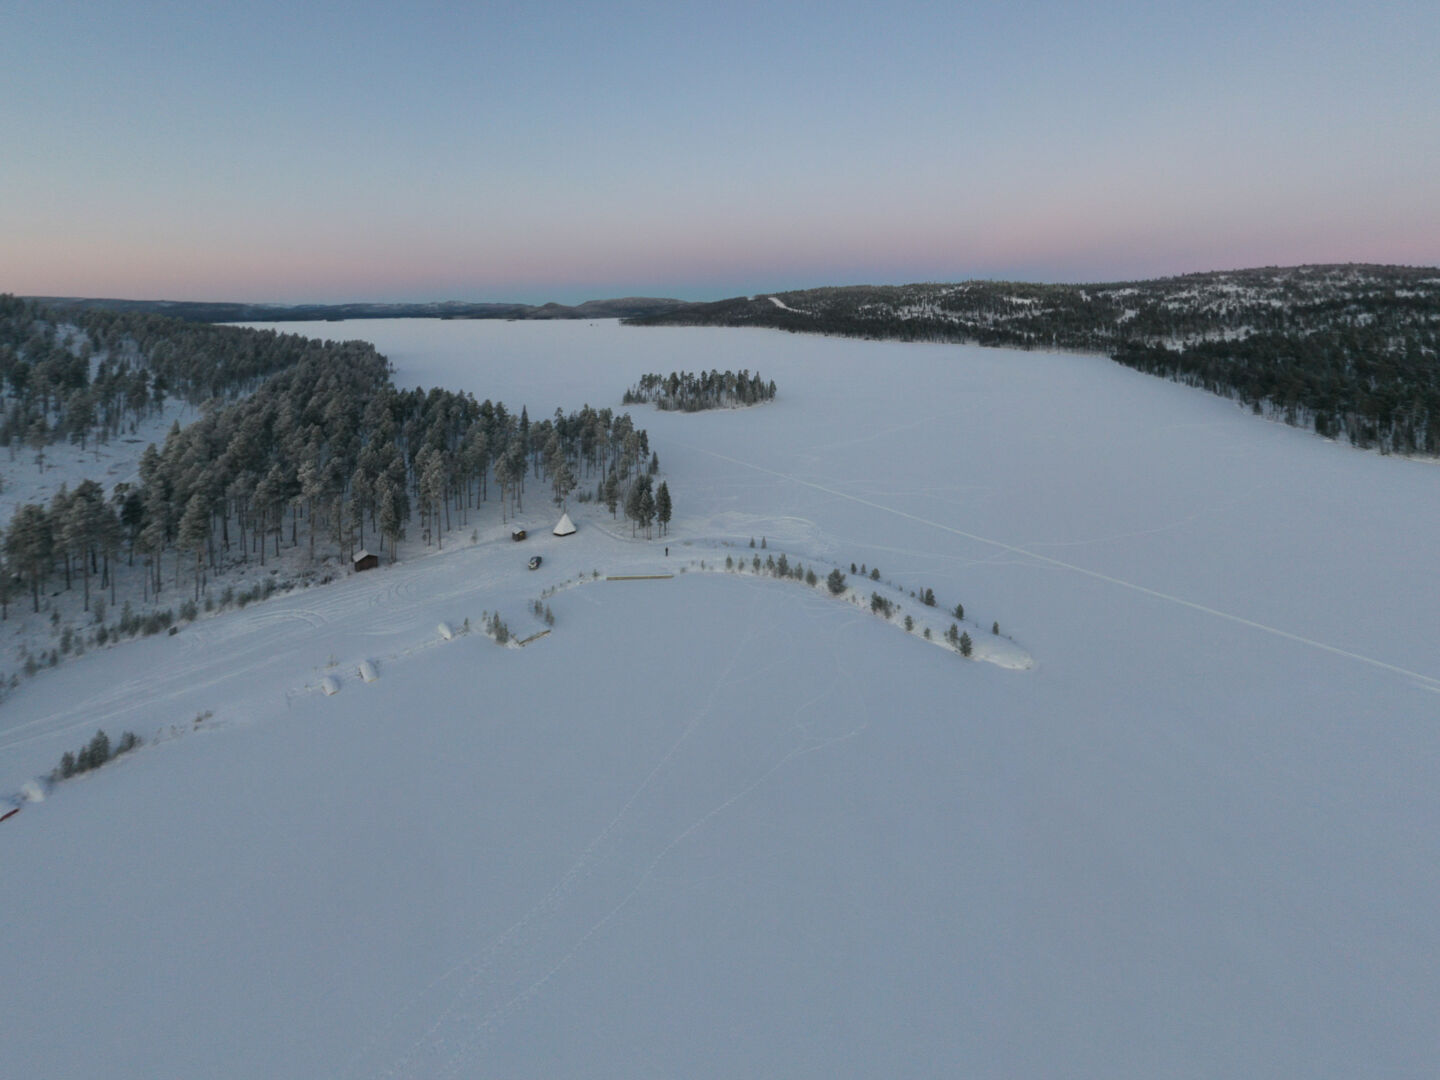 The frozen winter lake in Inari, a film location in Finnish Lapland